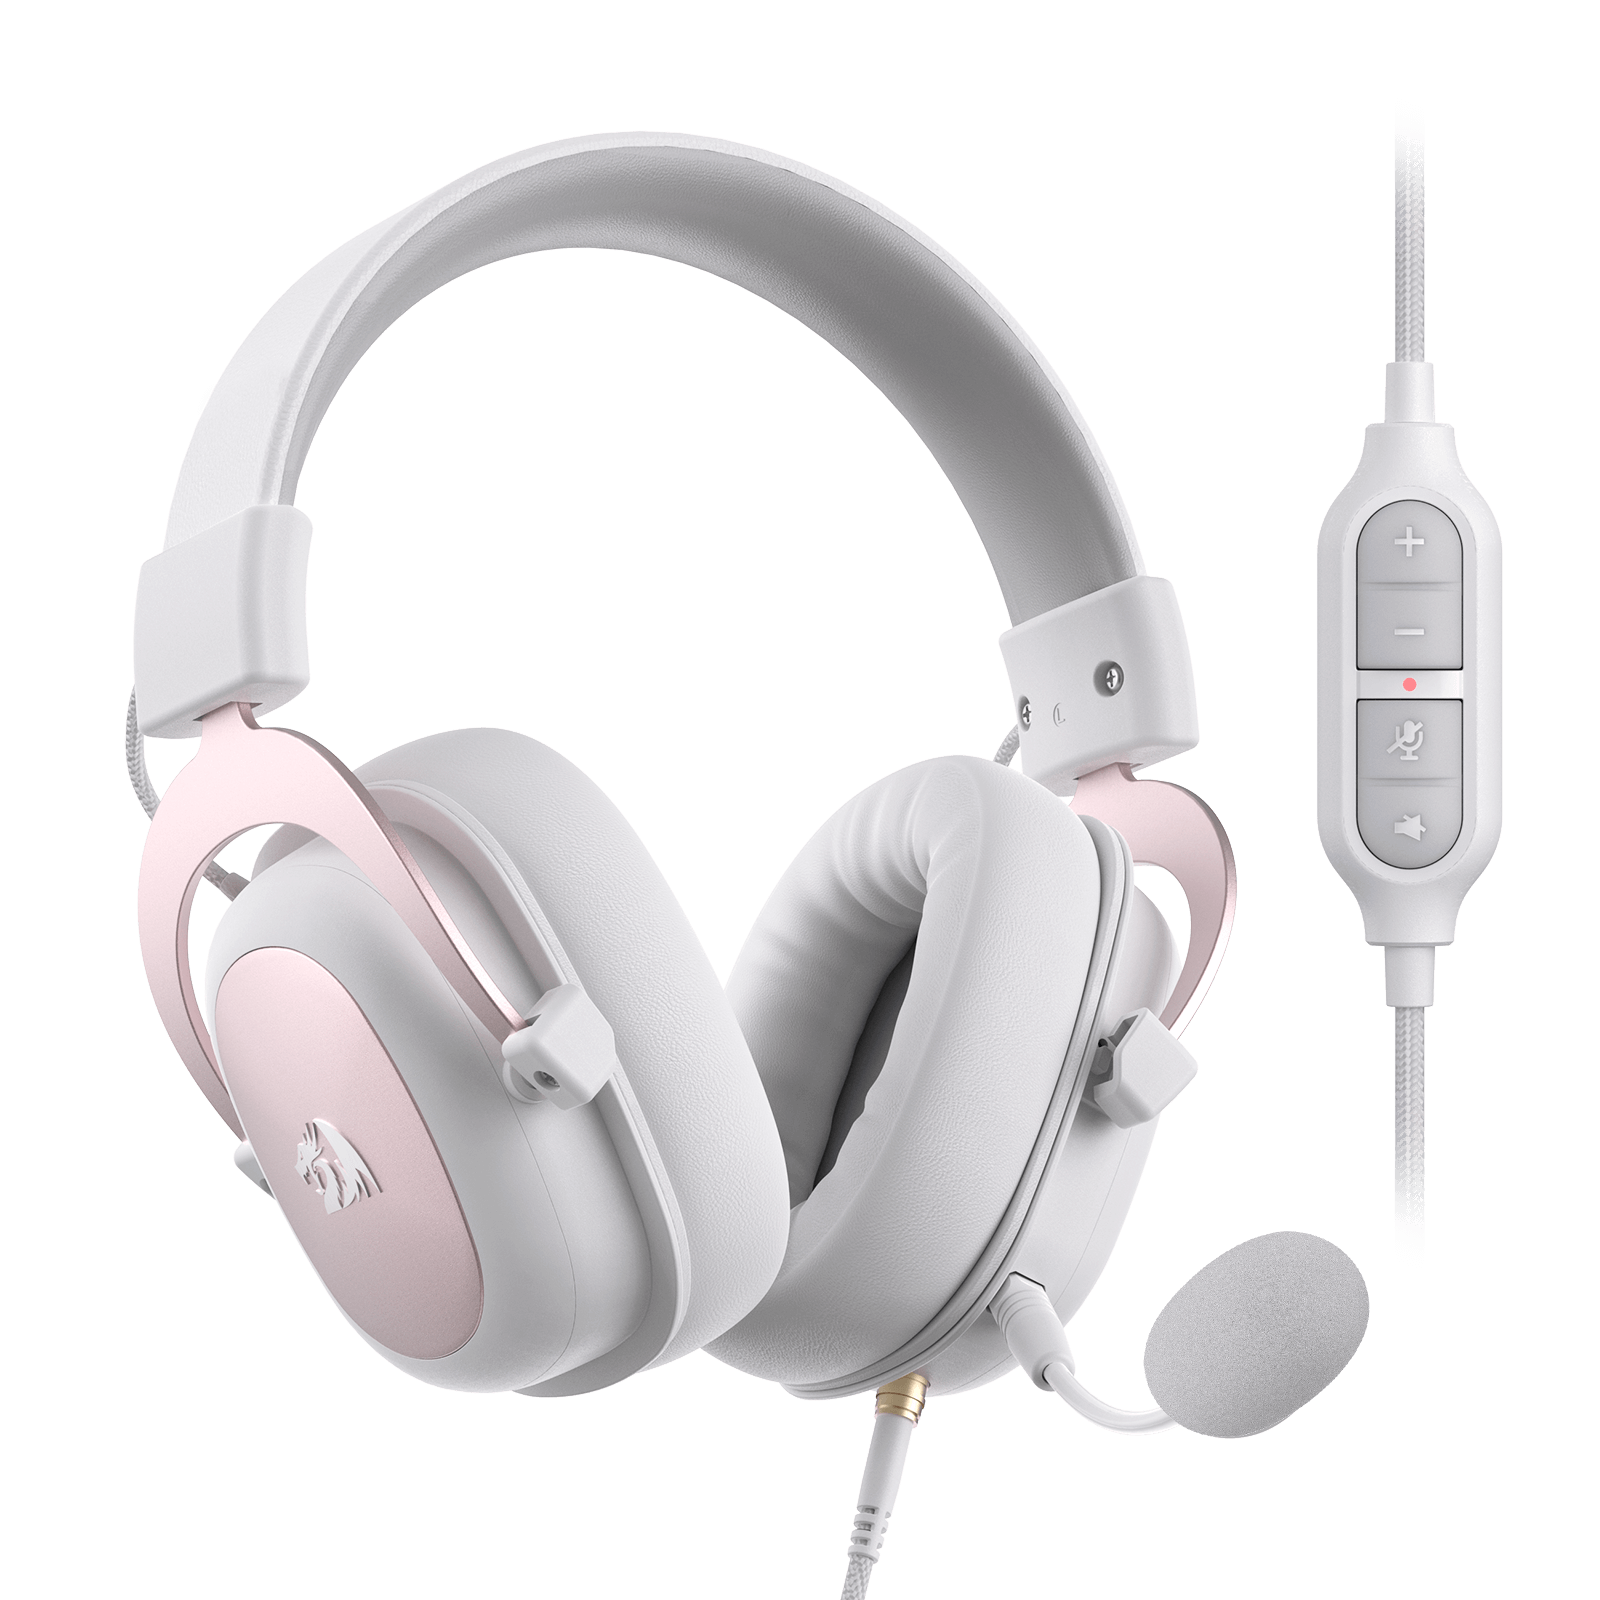 pink headset